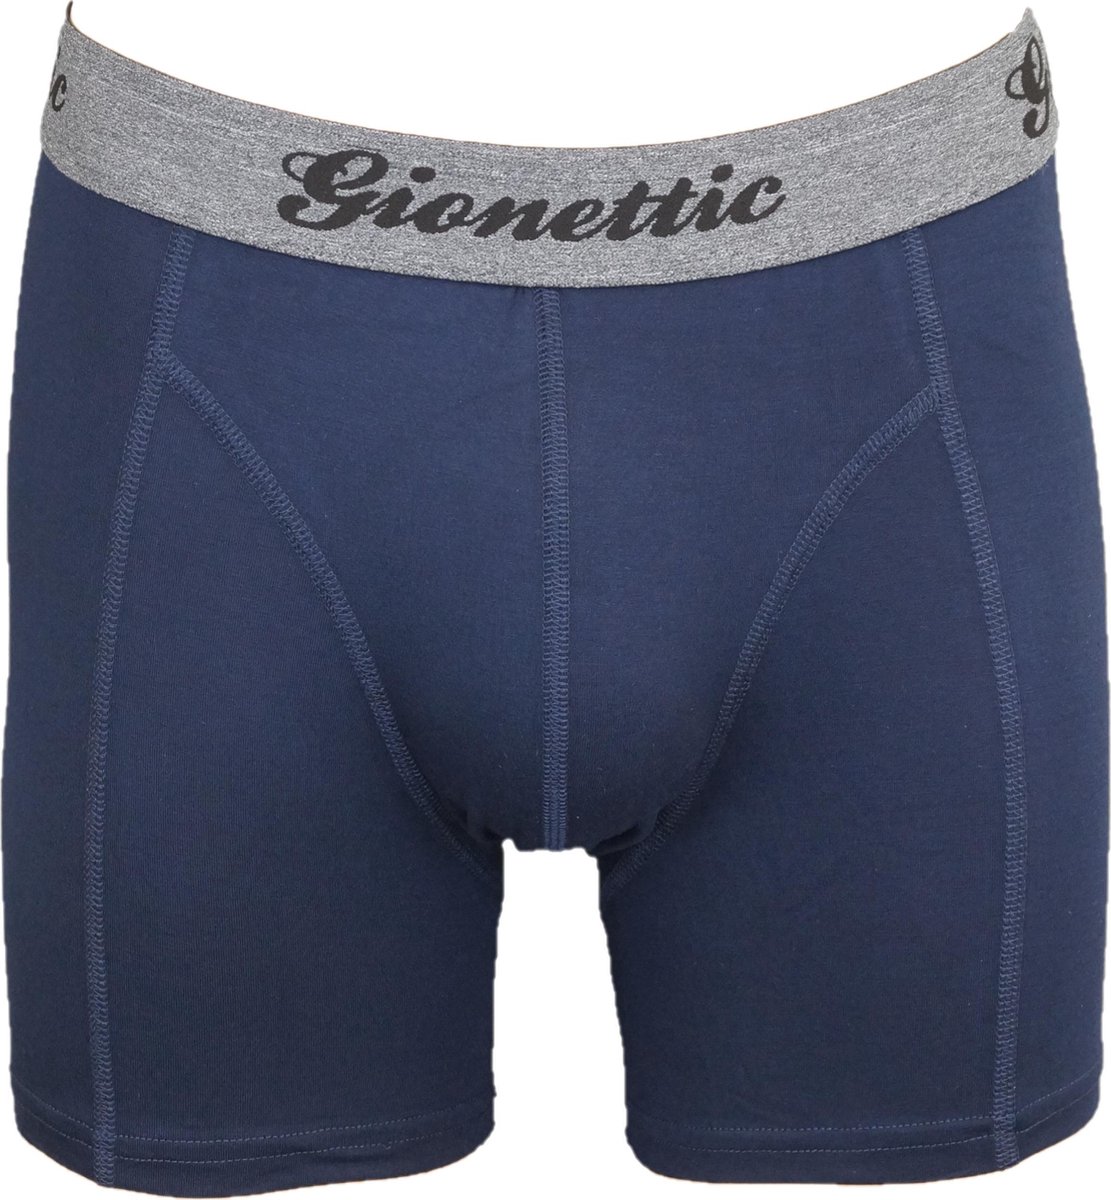 Gionettic Modal Heren boxershort Marine maat XL